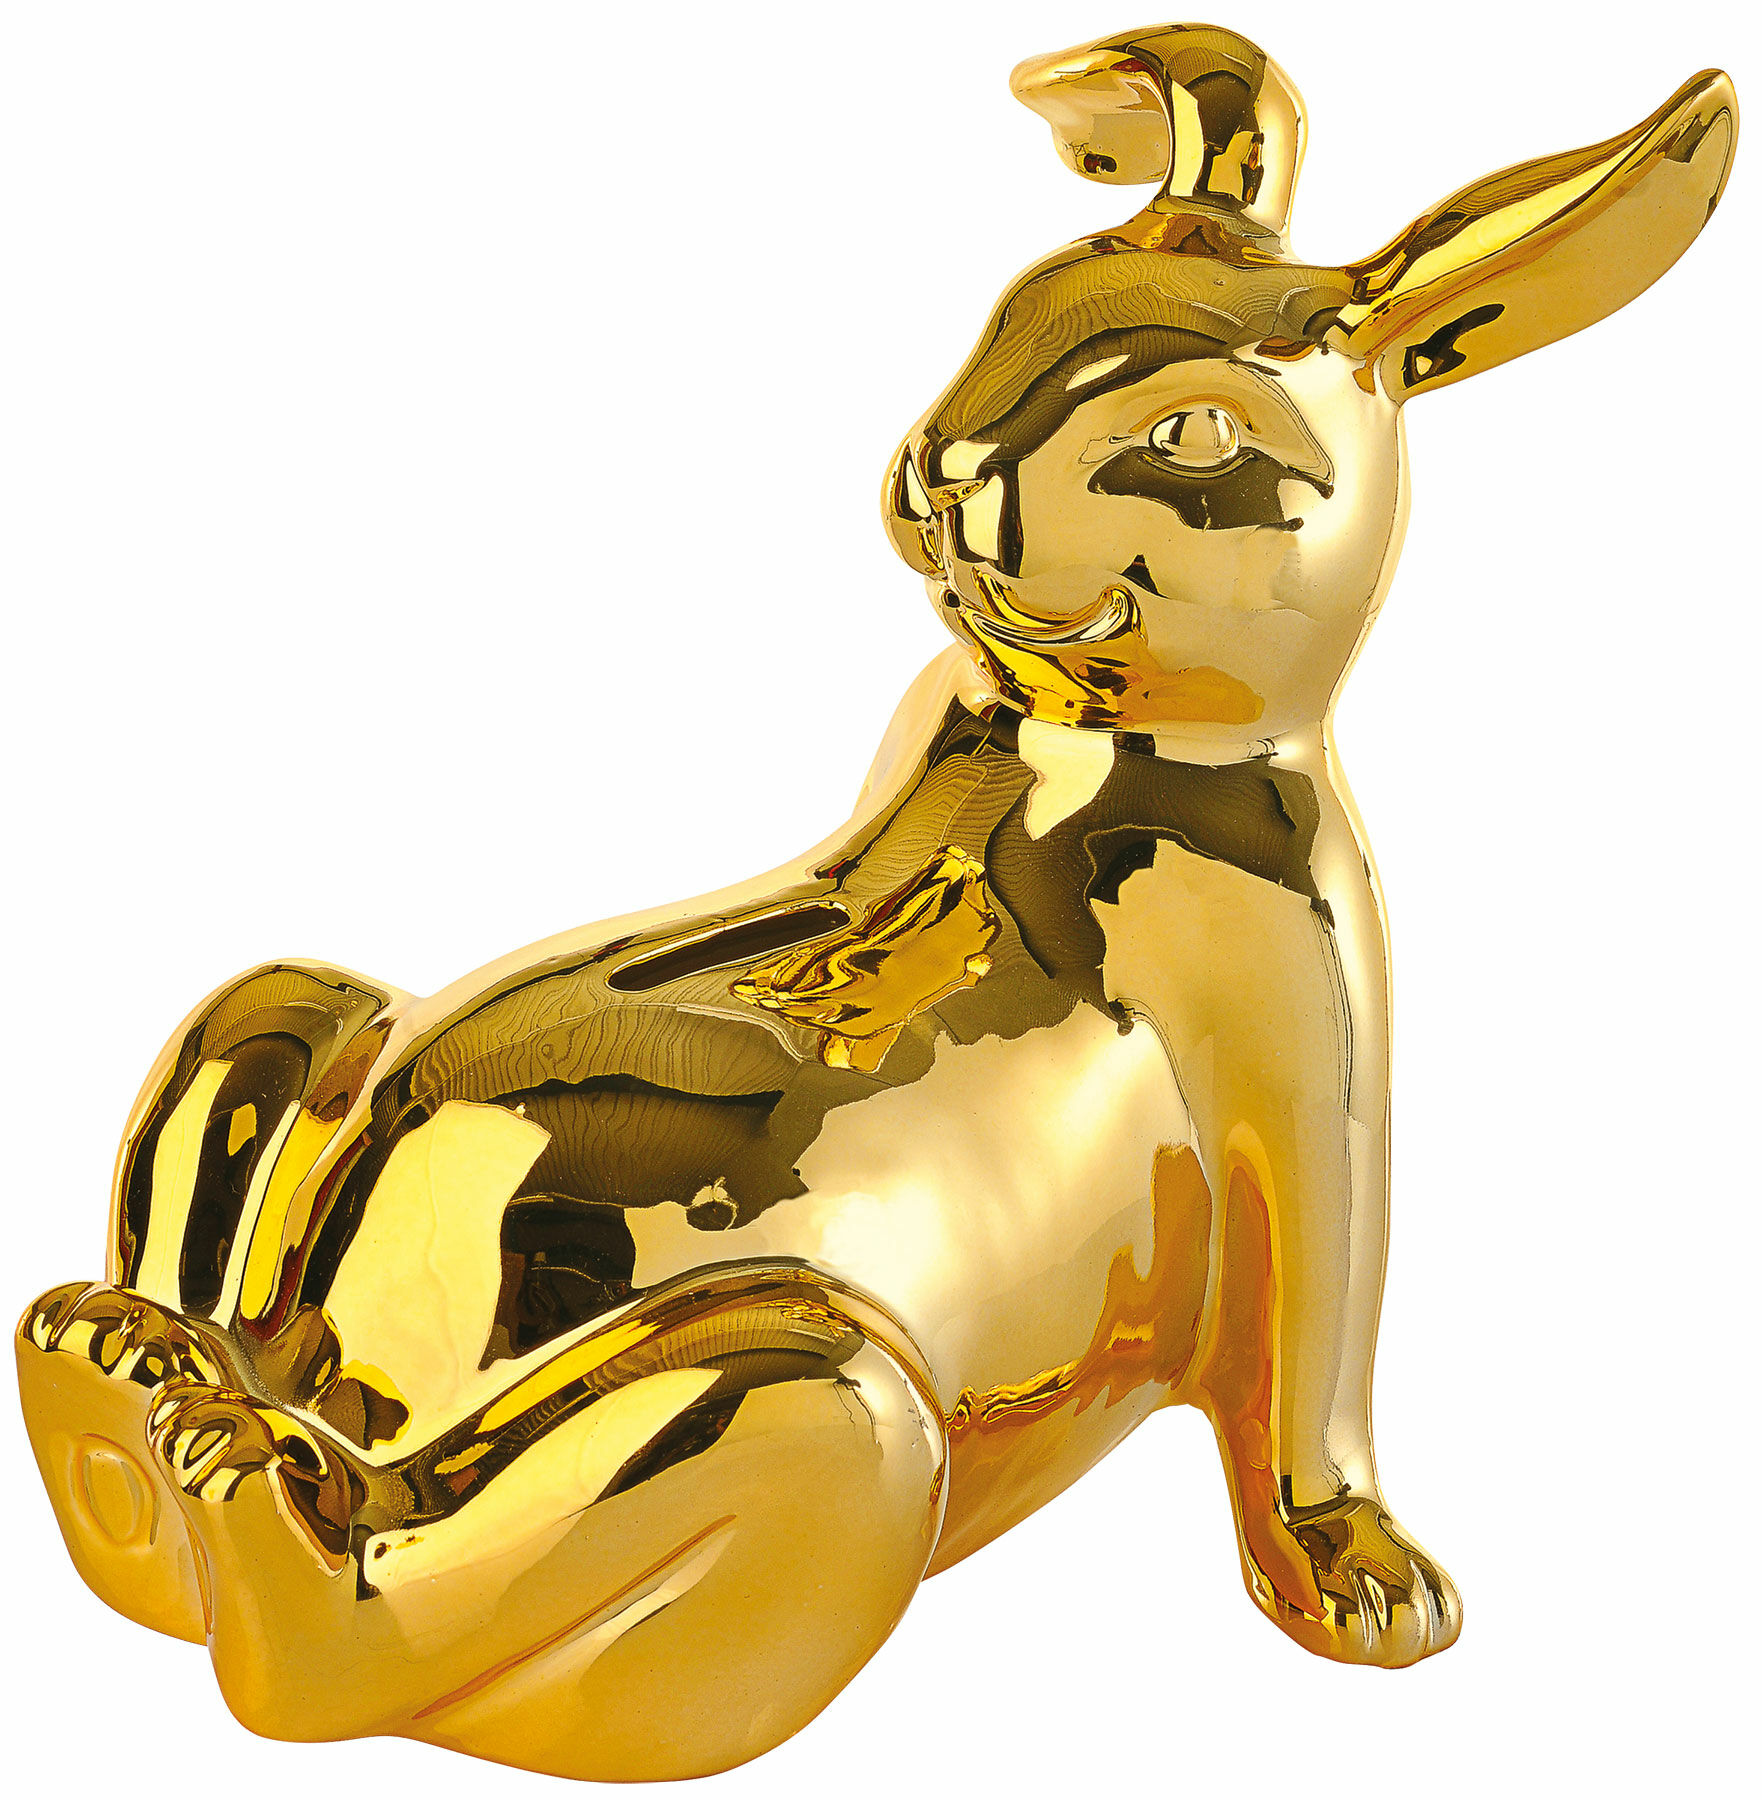 Money box "Golden Bunny", golden glazed porcelain by Pols Potten